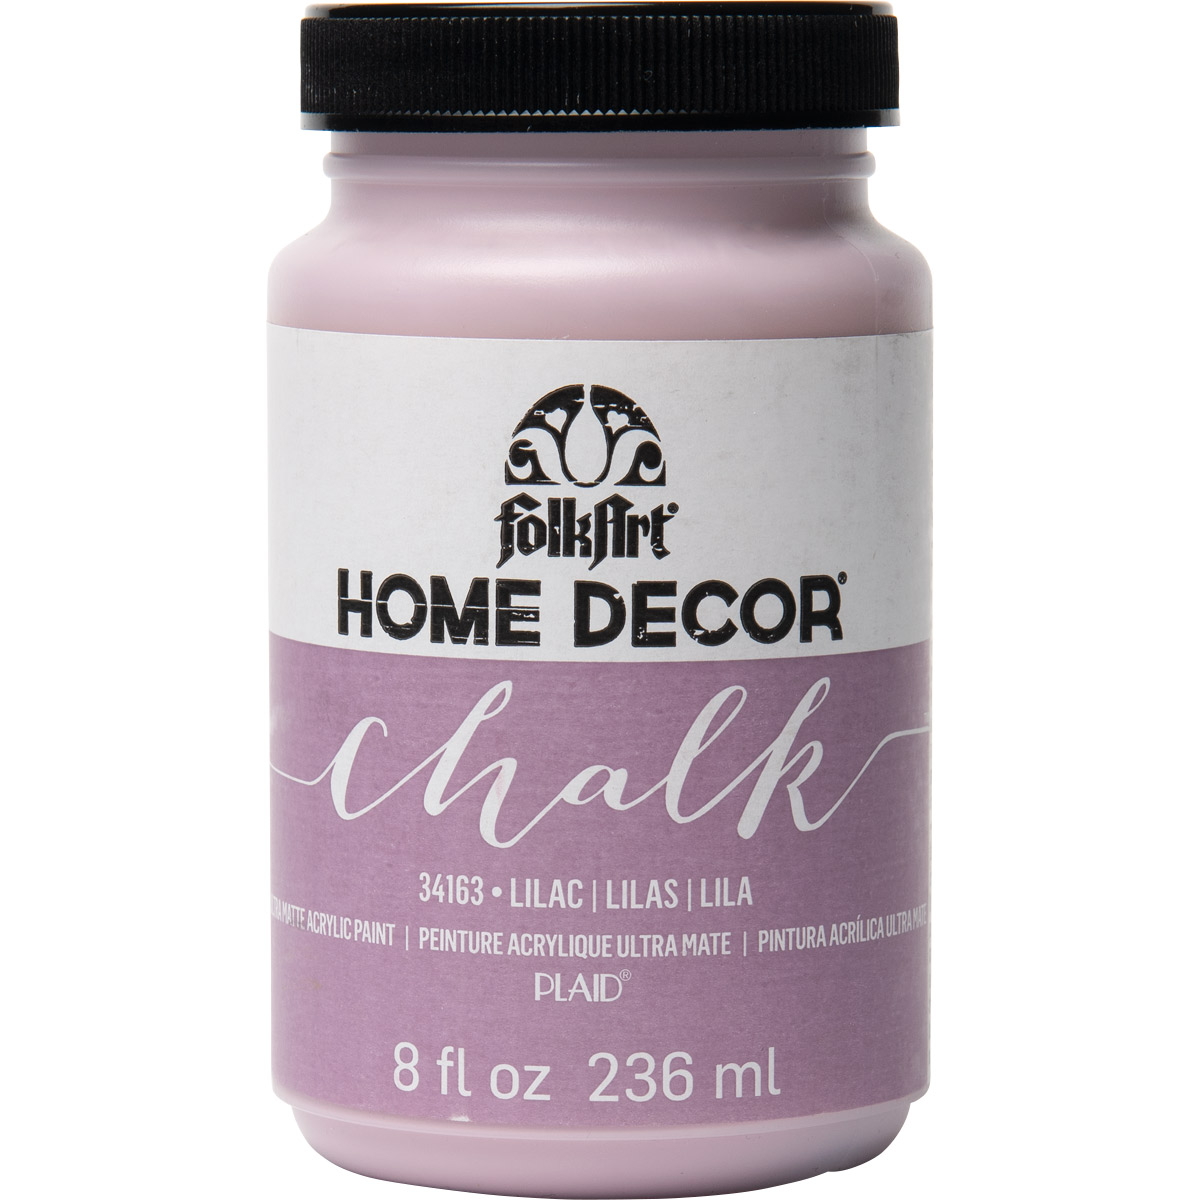 FolkArt Home Decor Chalk - Lilac, 8 oz. - 34163